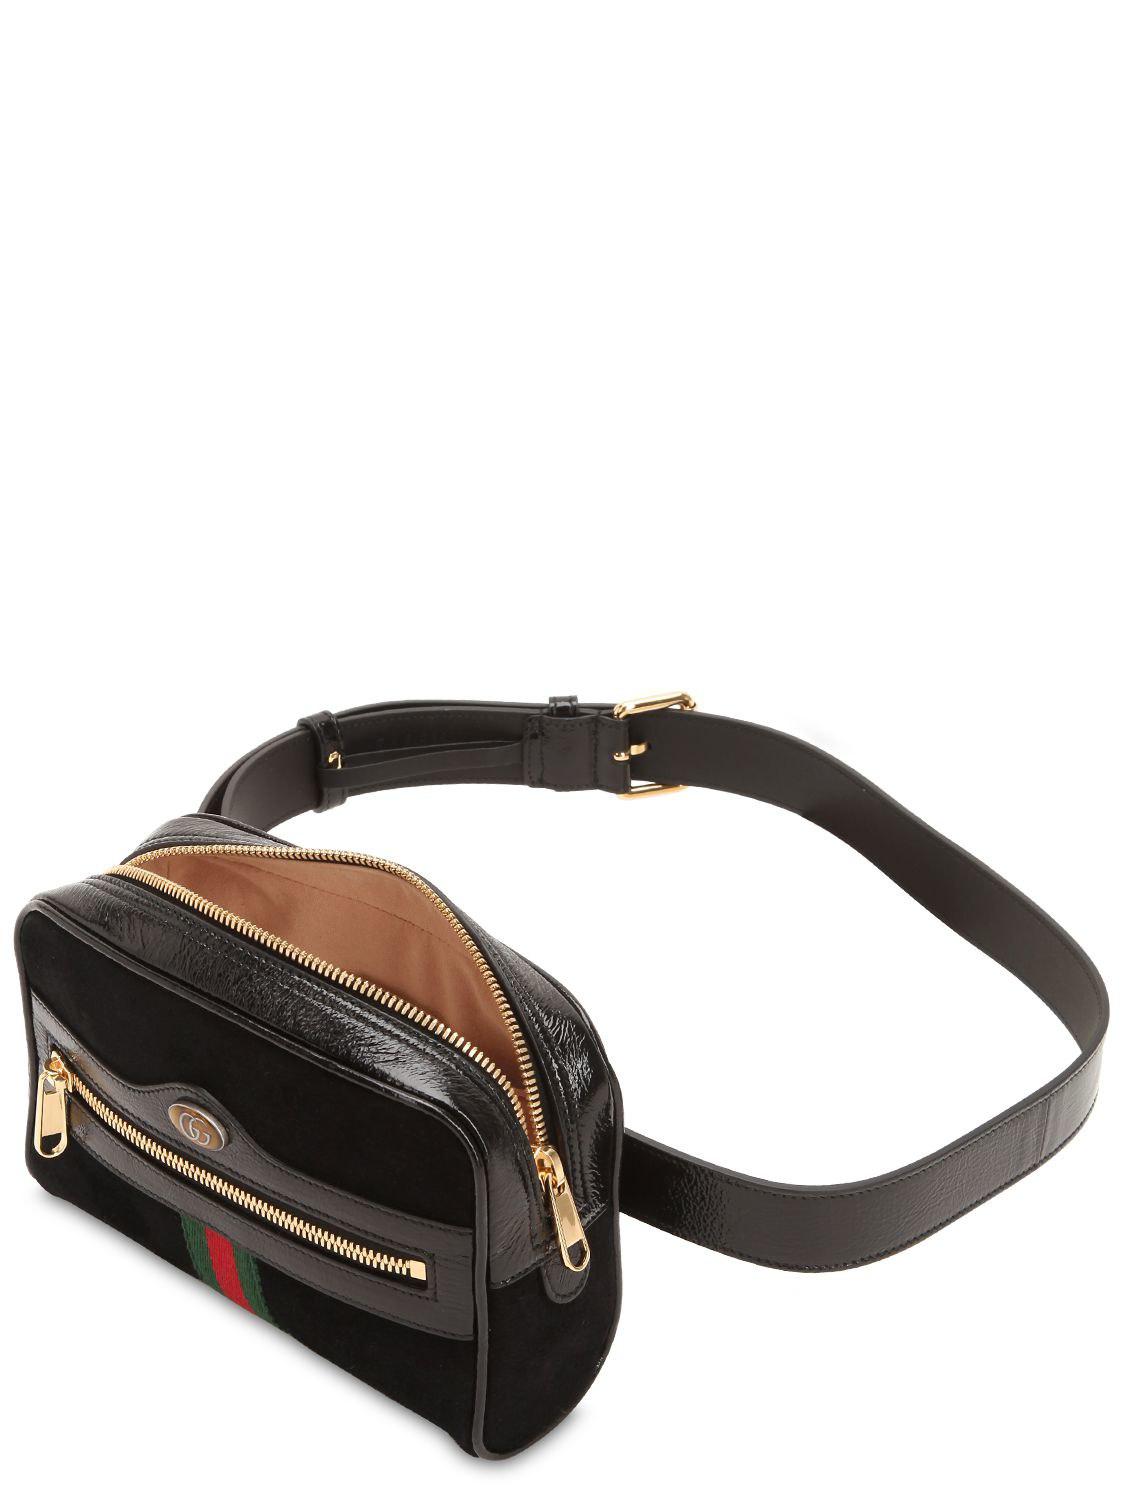 Gucci Ophidia Suede Belt Bag in Black - Lyst